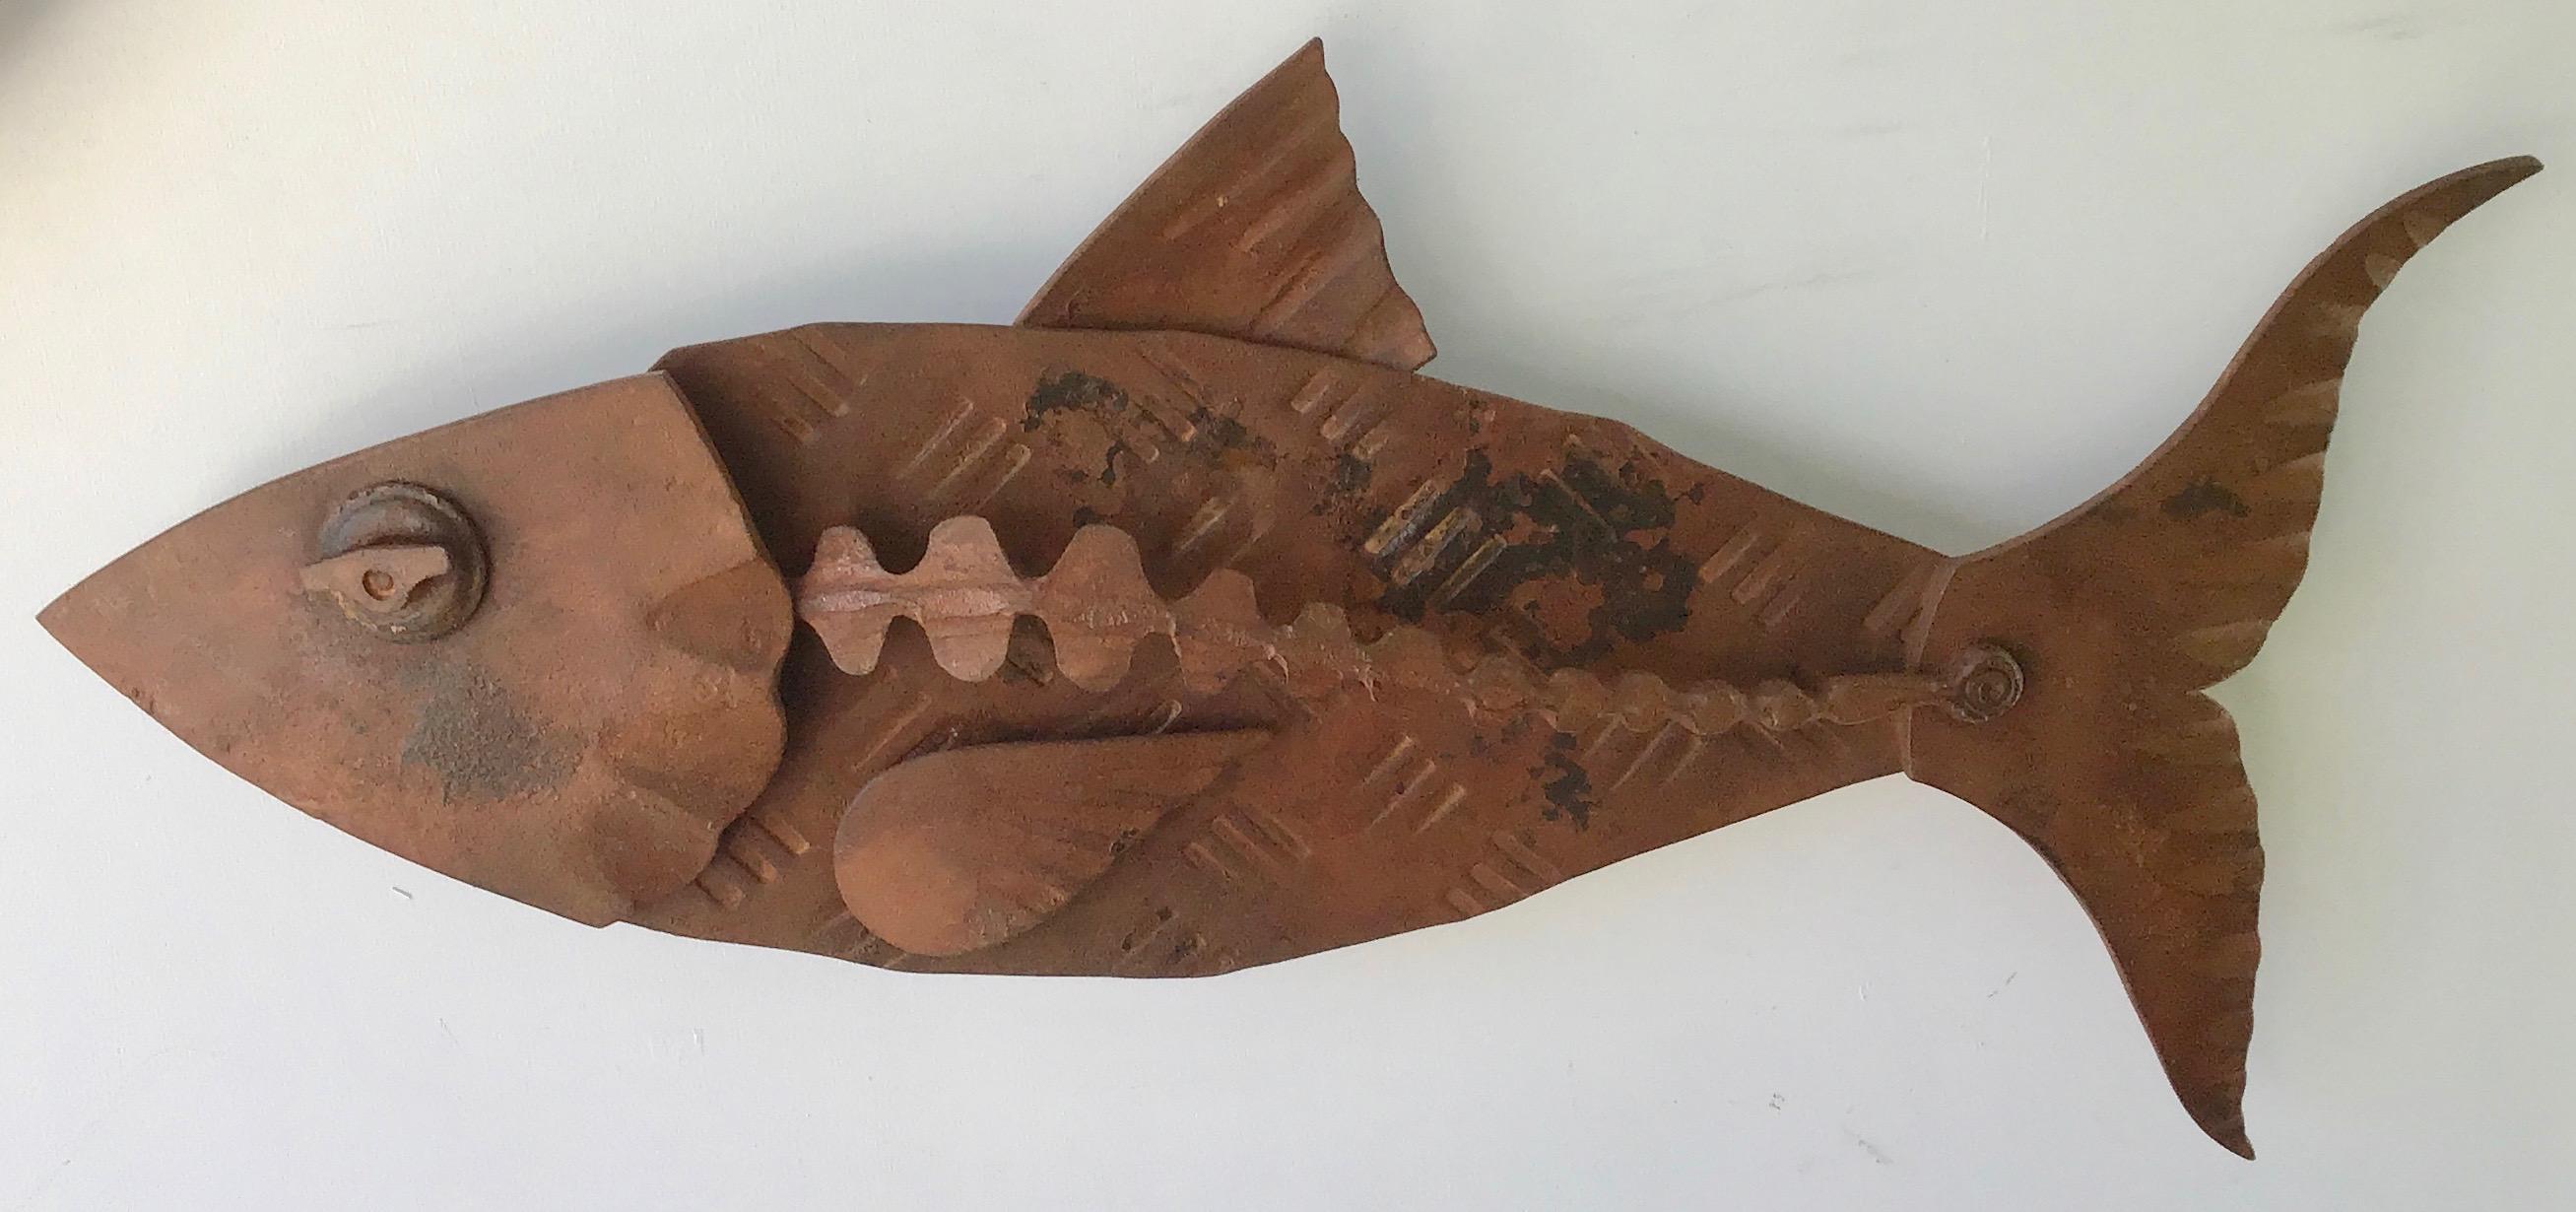 Hugh Holborn Figurative Sculpture - "Alubulidae 2" Hand forged salvaged steel fish wall sculpture